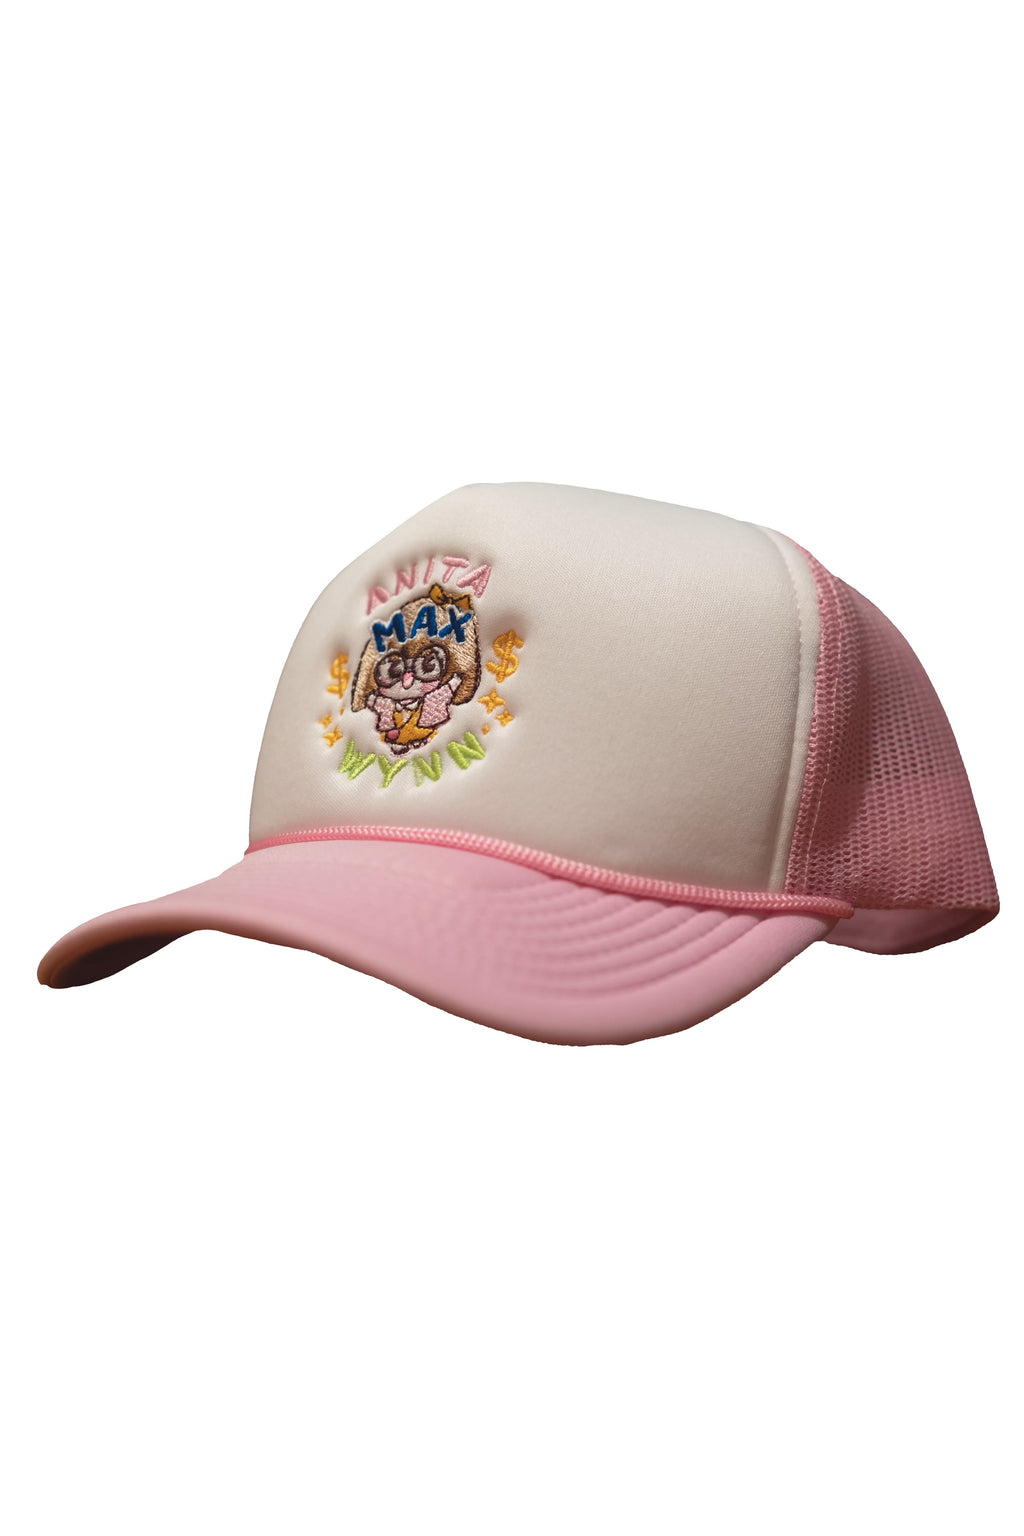 AMW Pink Trucker Hat